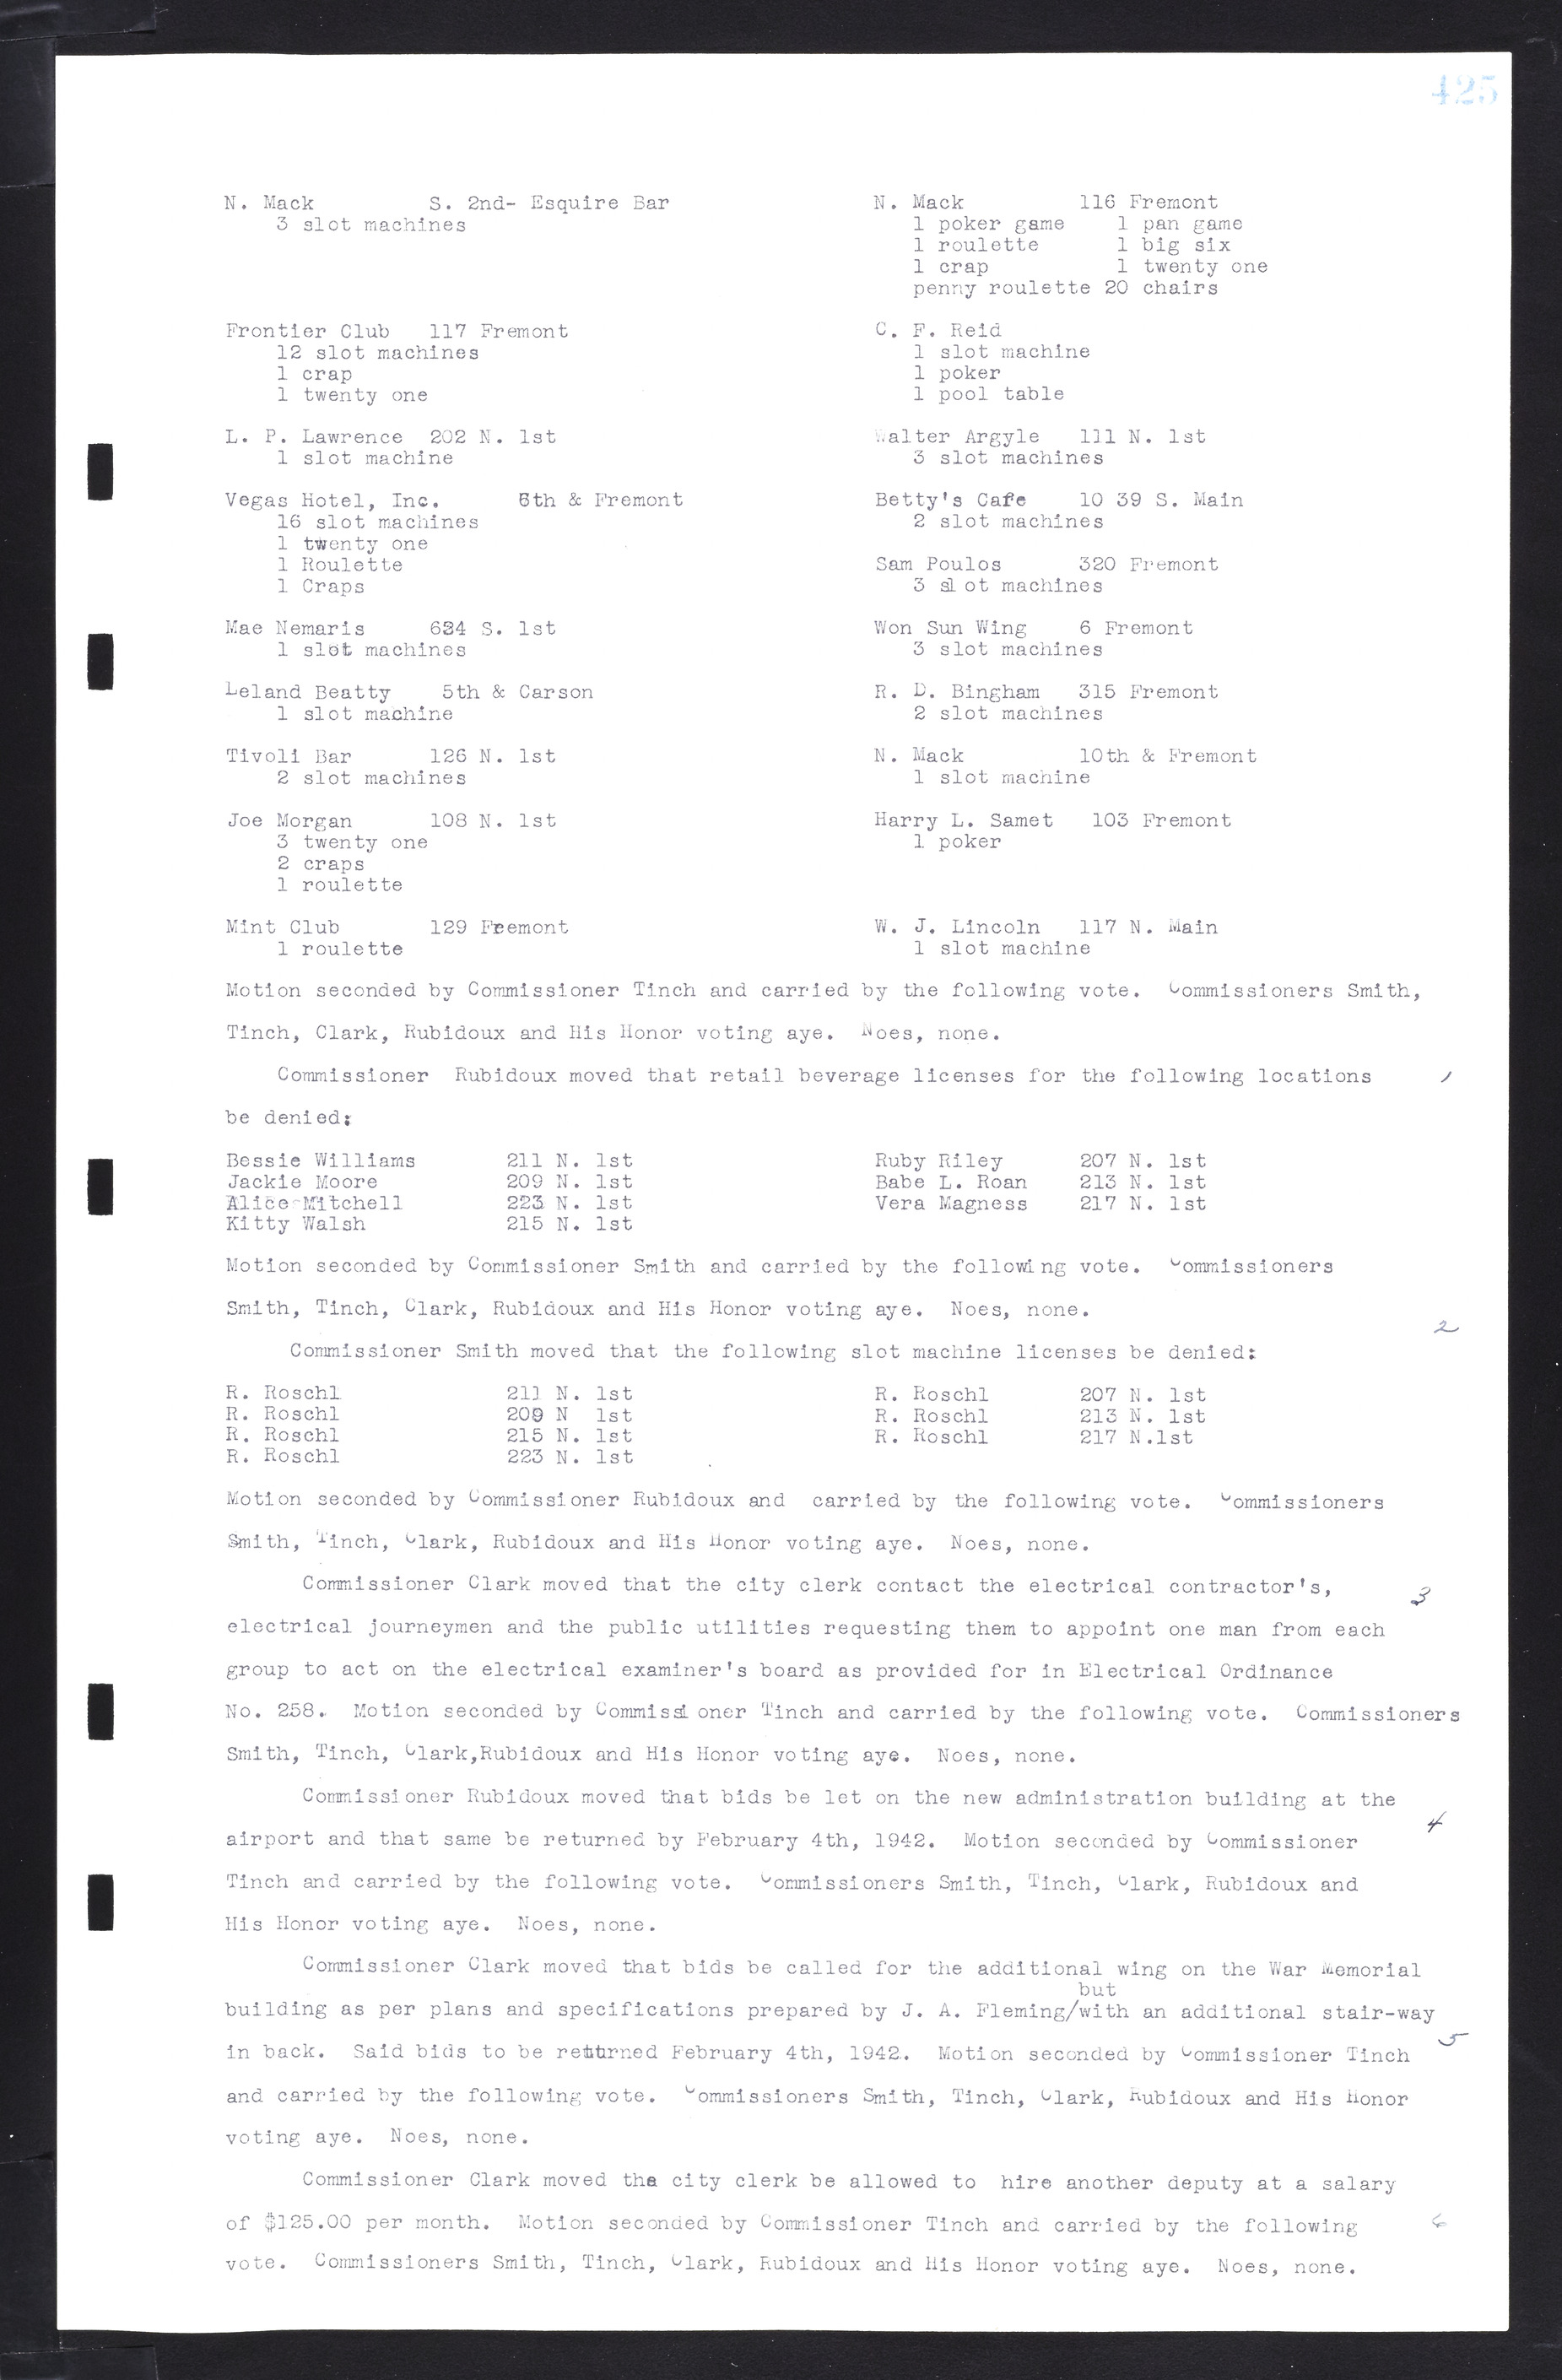 Las Vegas City Commission Minutes, February 17, 1937 to August 4, 1942, lvc000004-453